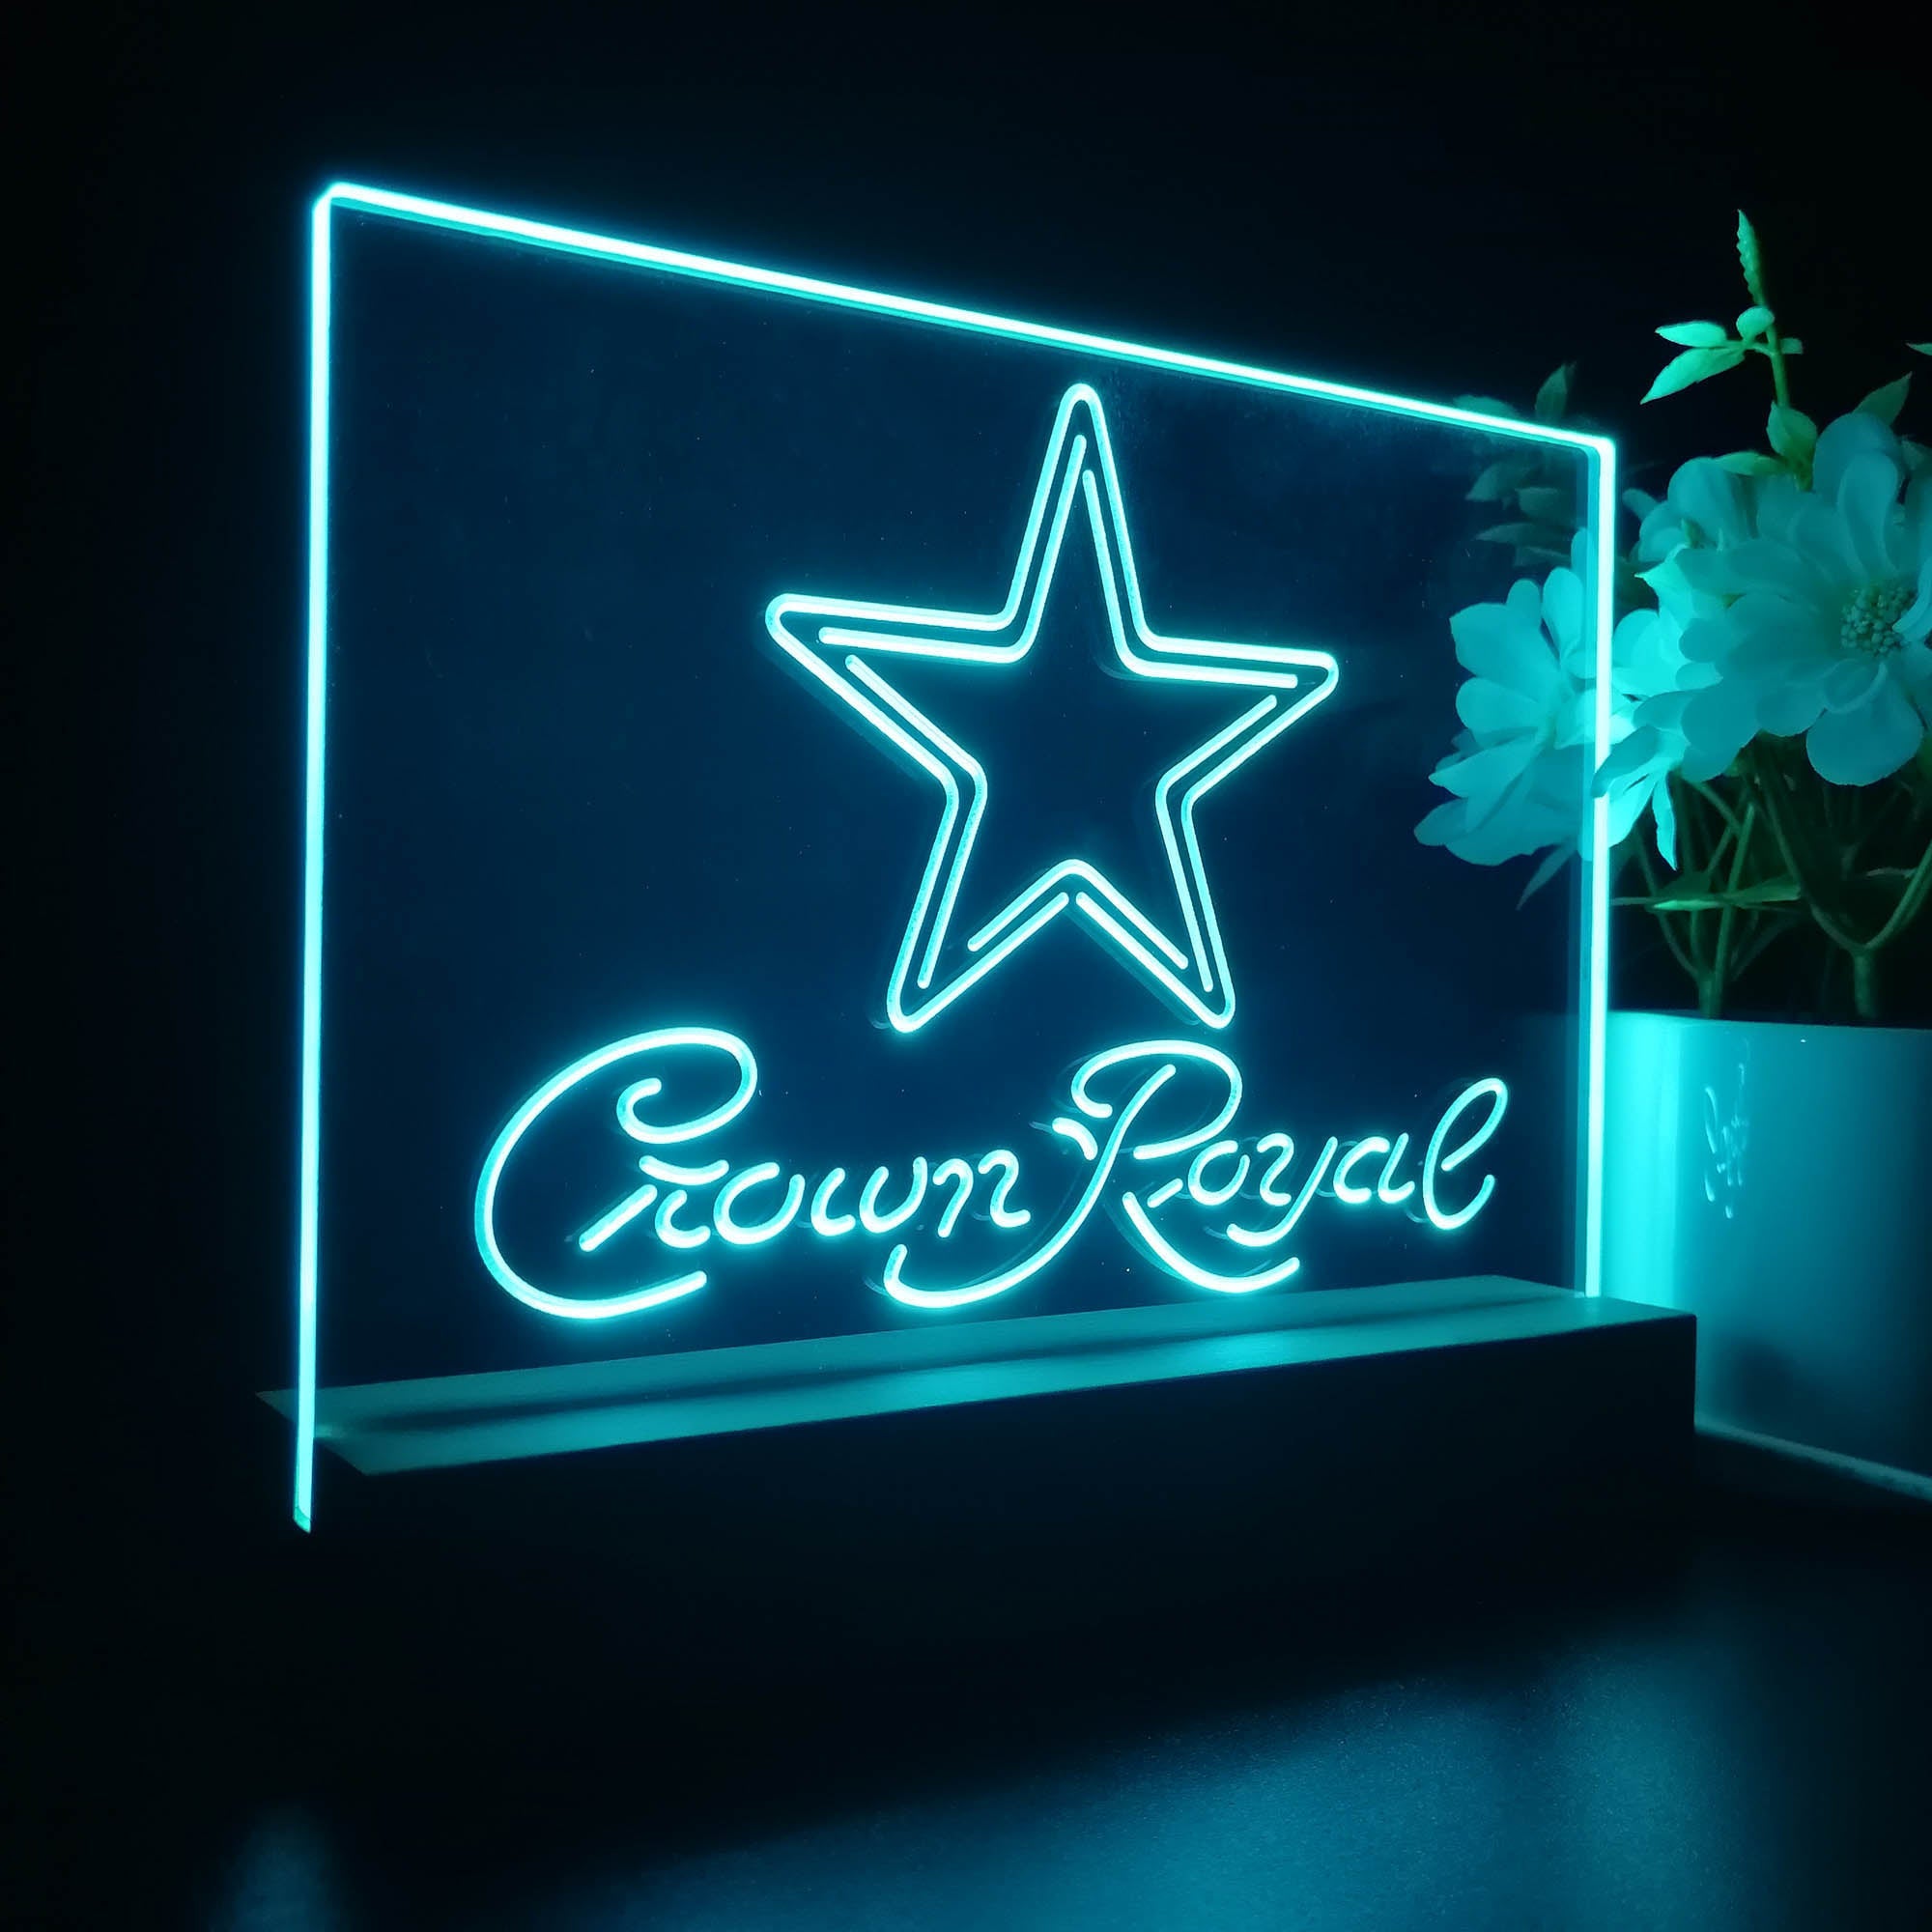 Crown Royal Bar Dallas Cowboys Est. 1960 Night Light Pub Bar Lamp